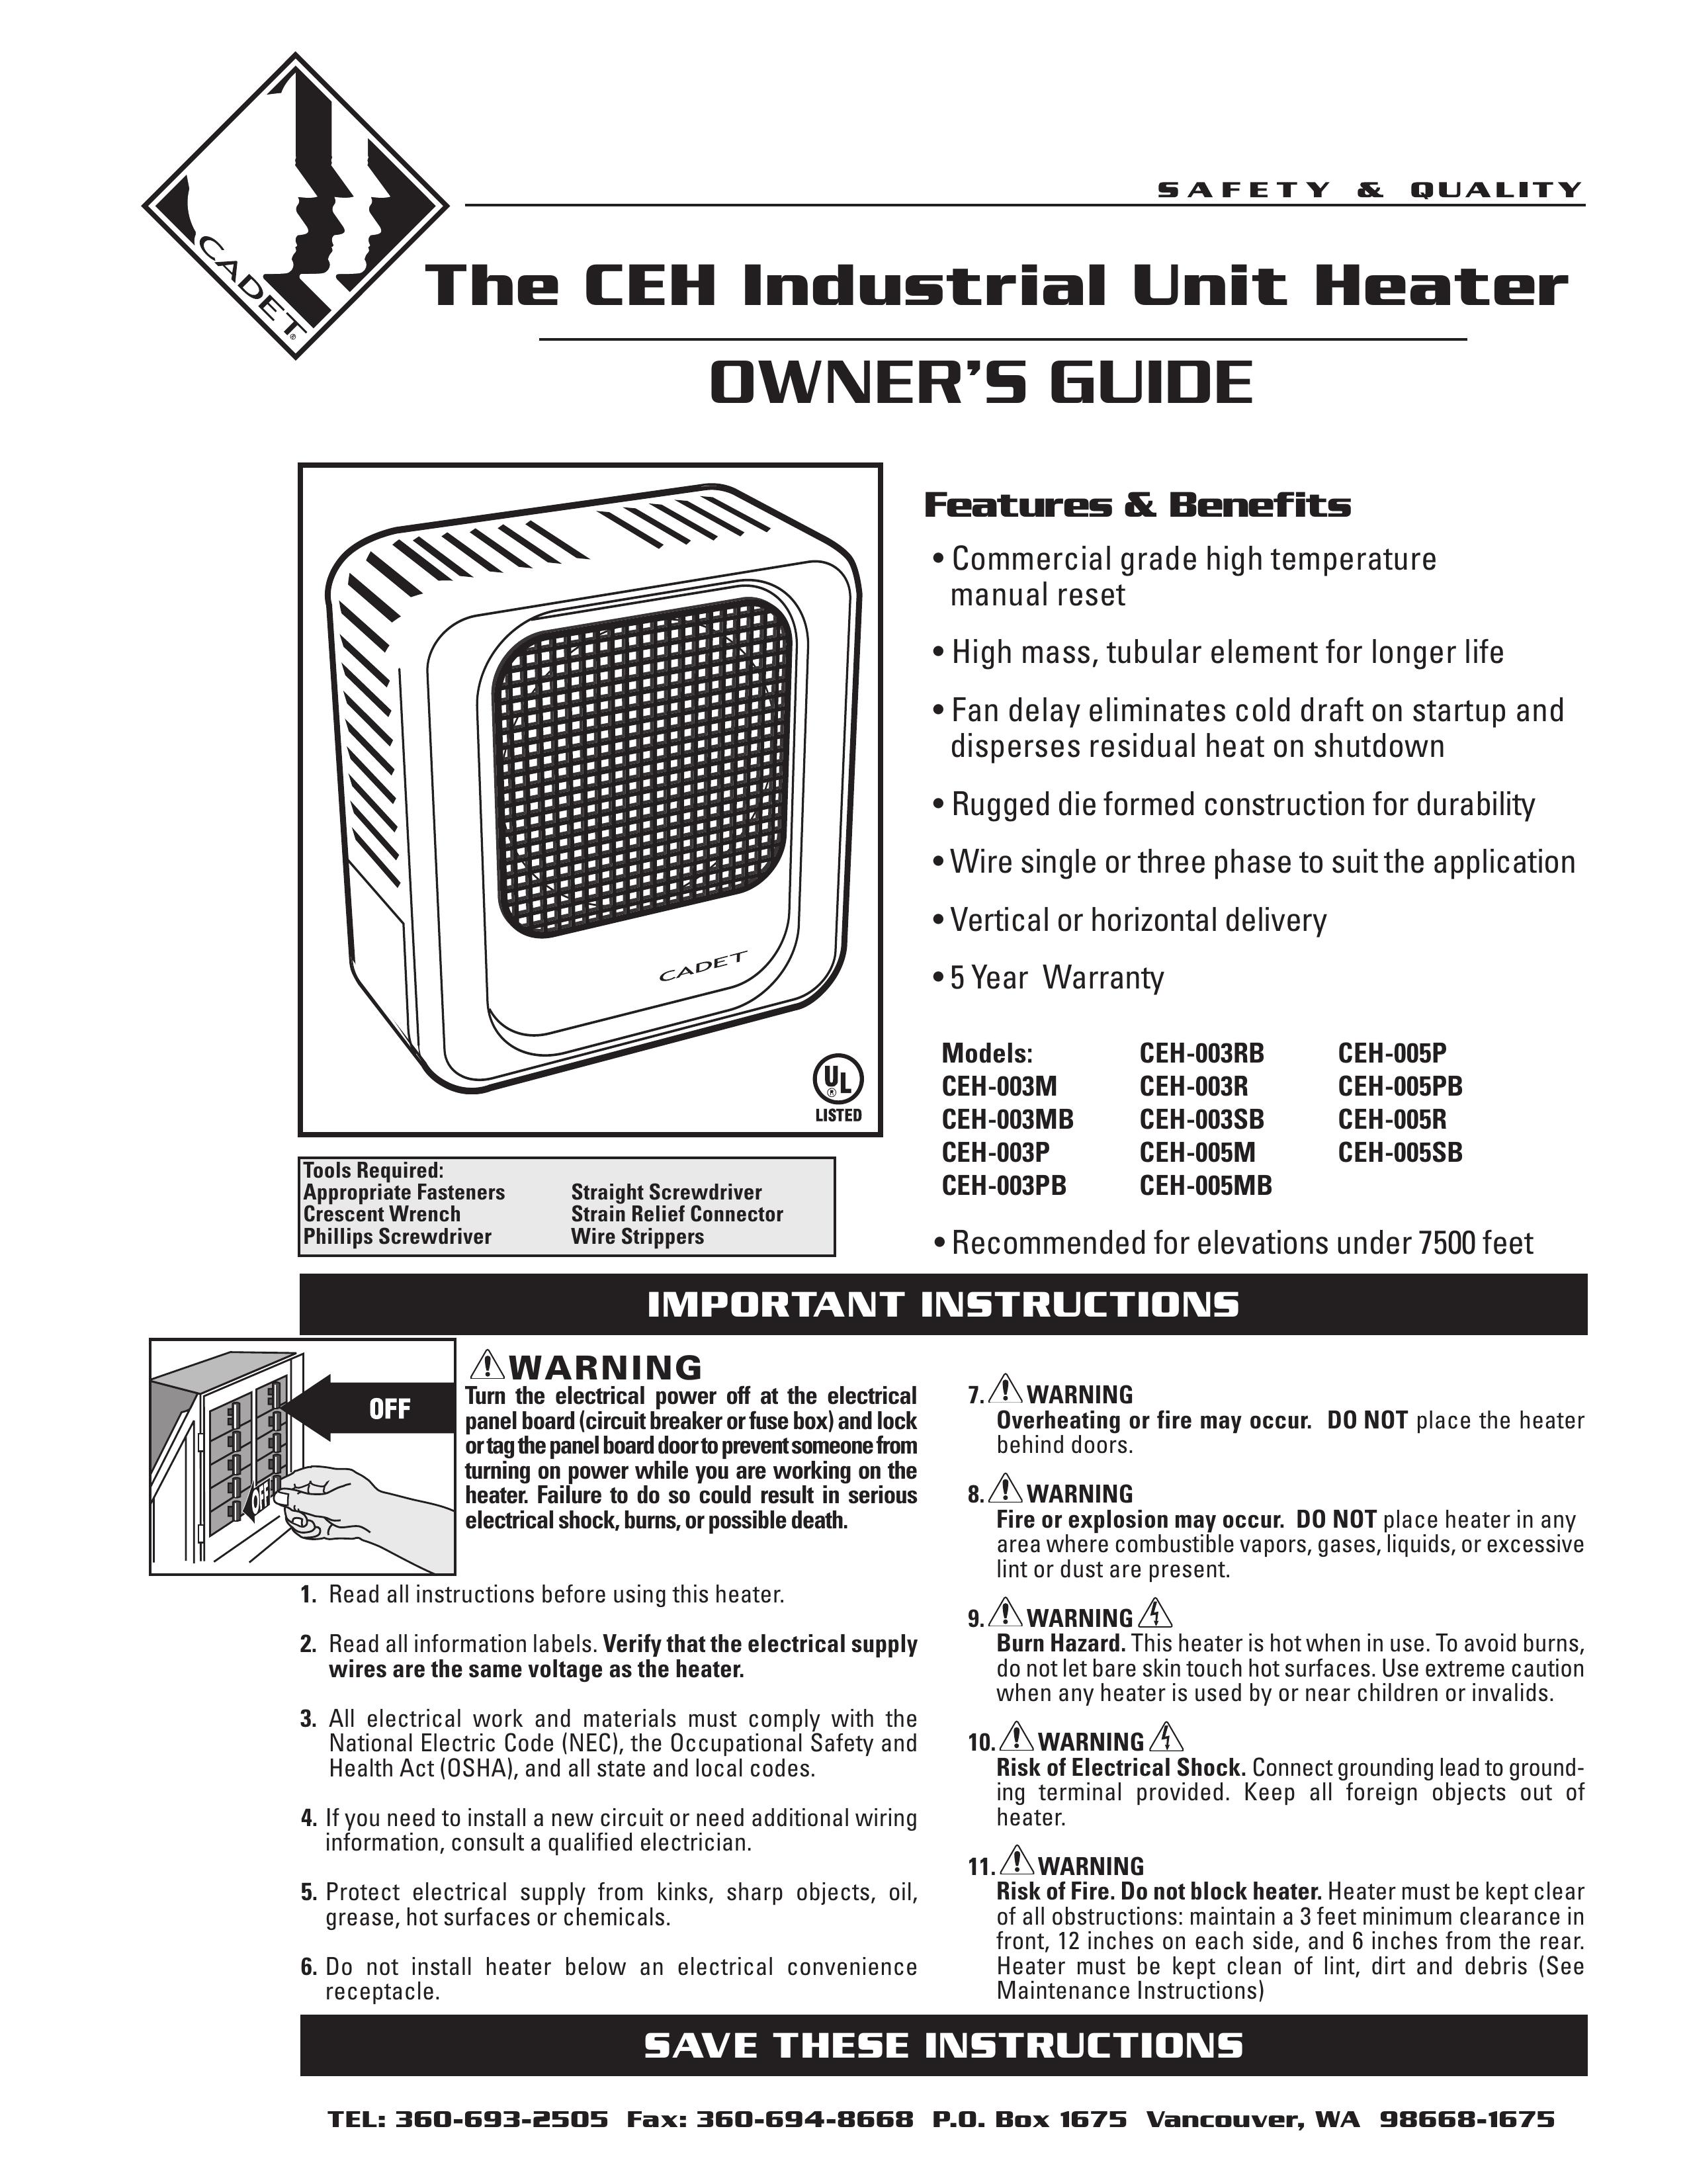 Cadet CEH-003SB Patio Heater User Manual